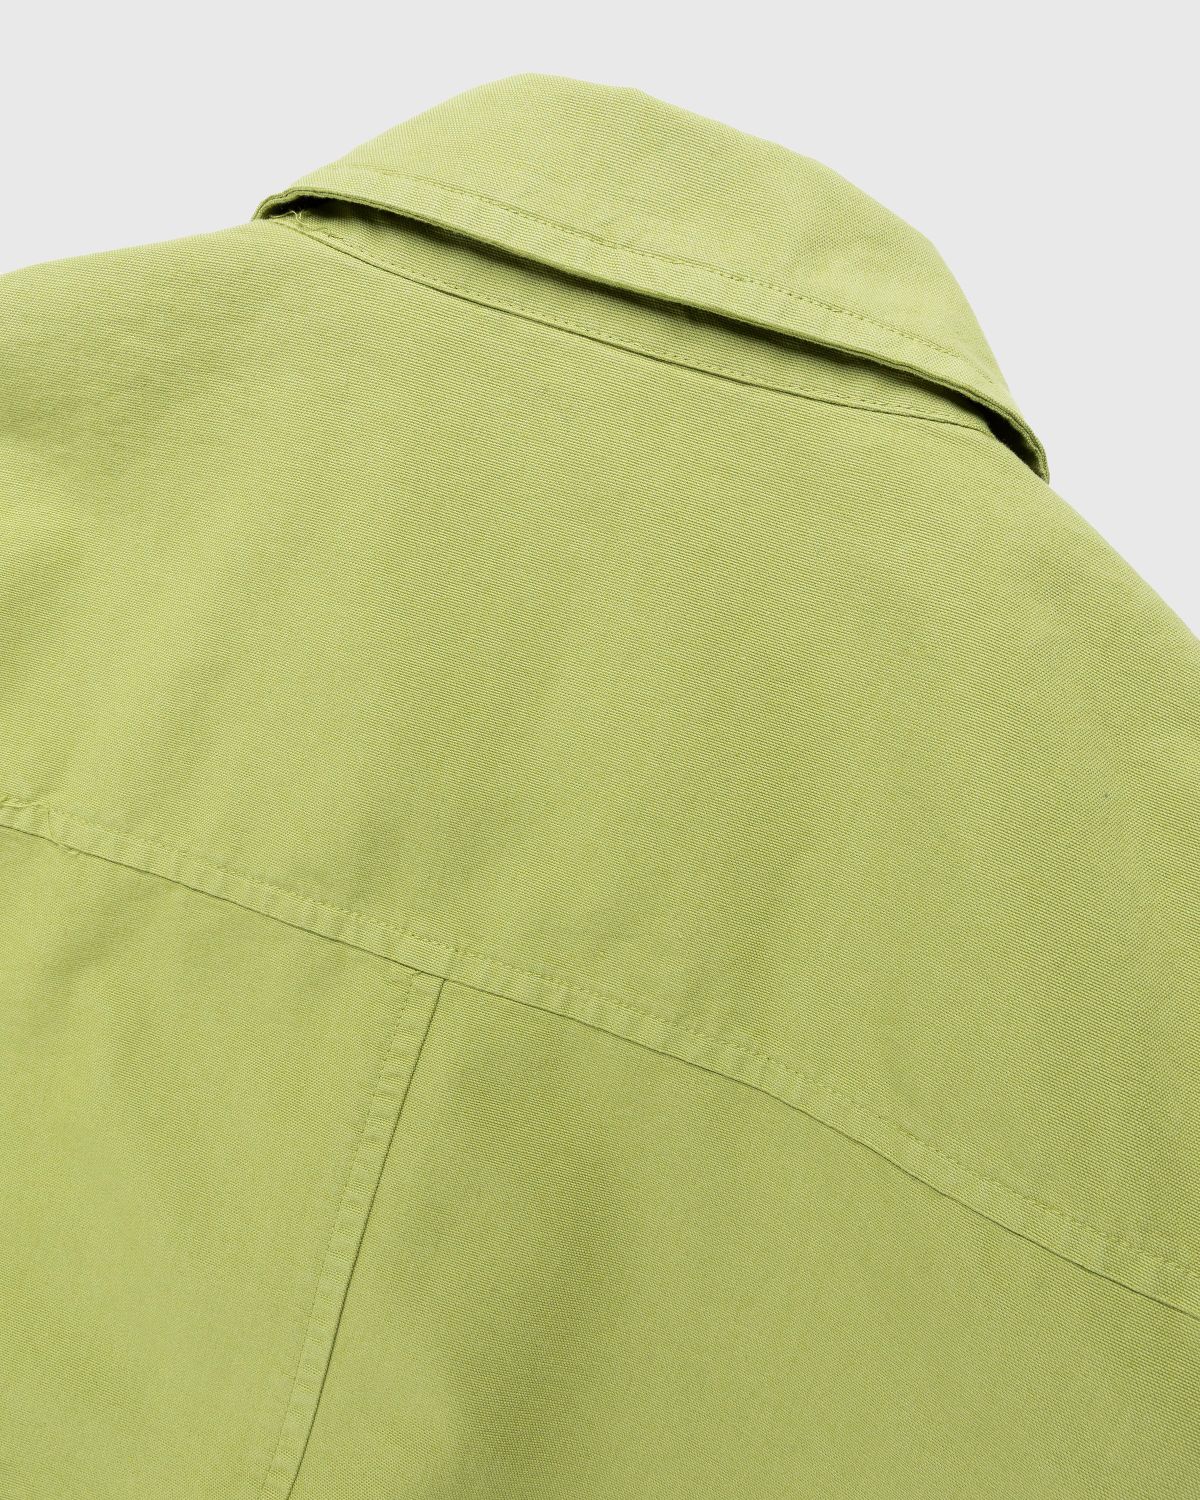 Winnie New York – Double Pocket Cotton Jacket Green - Outerwear - Green - Image 3